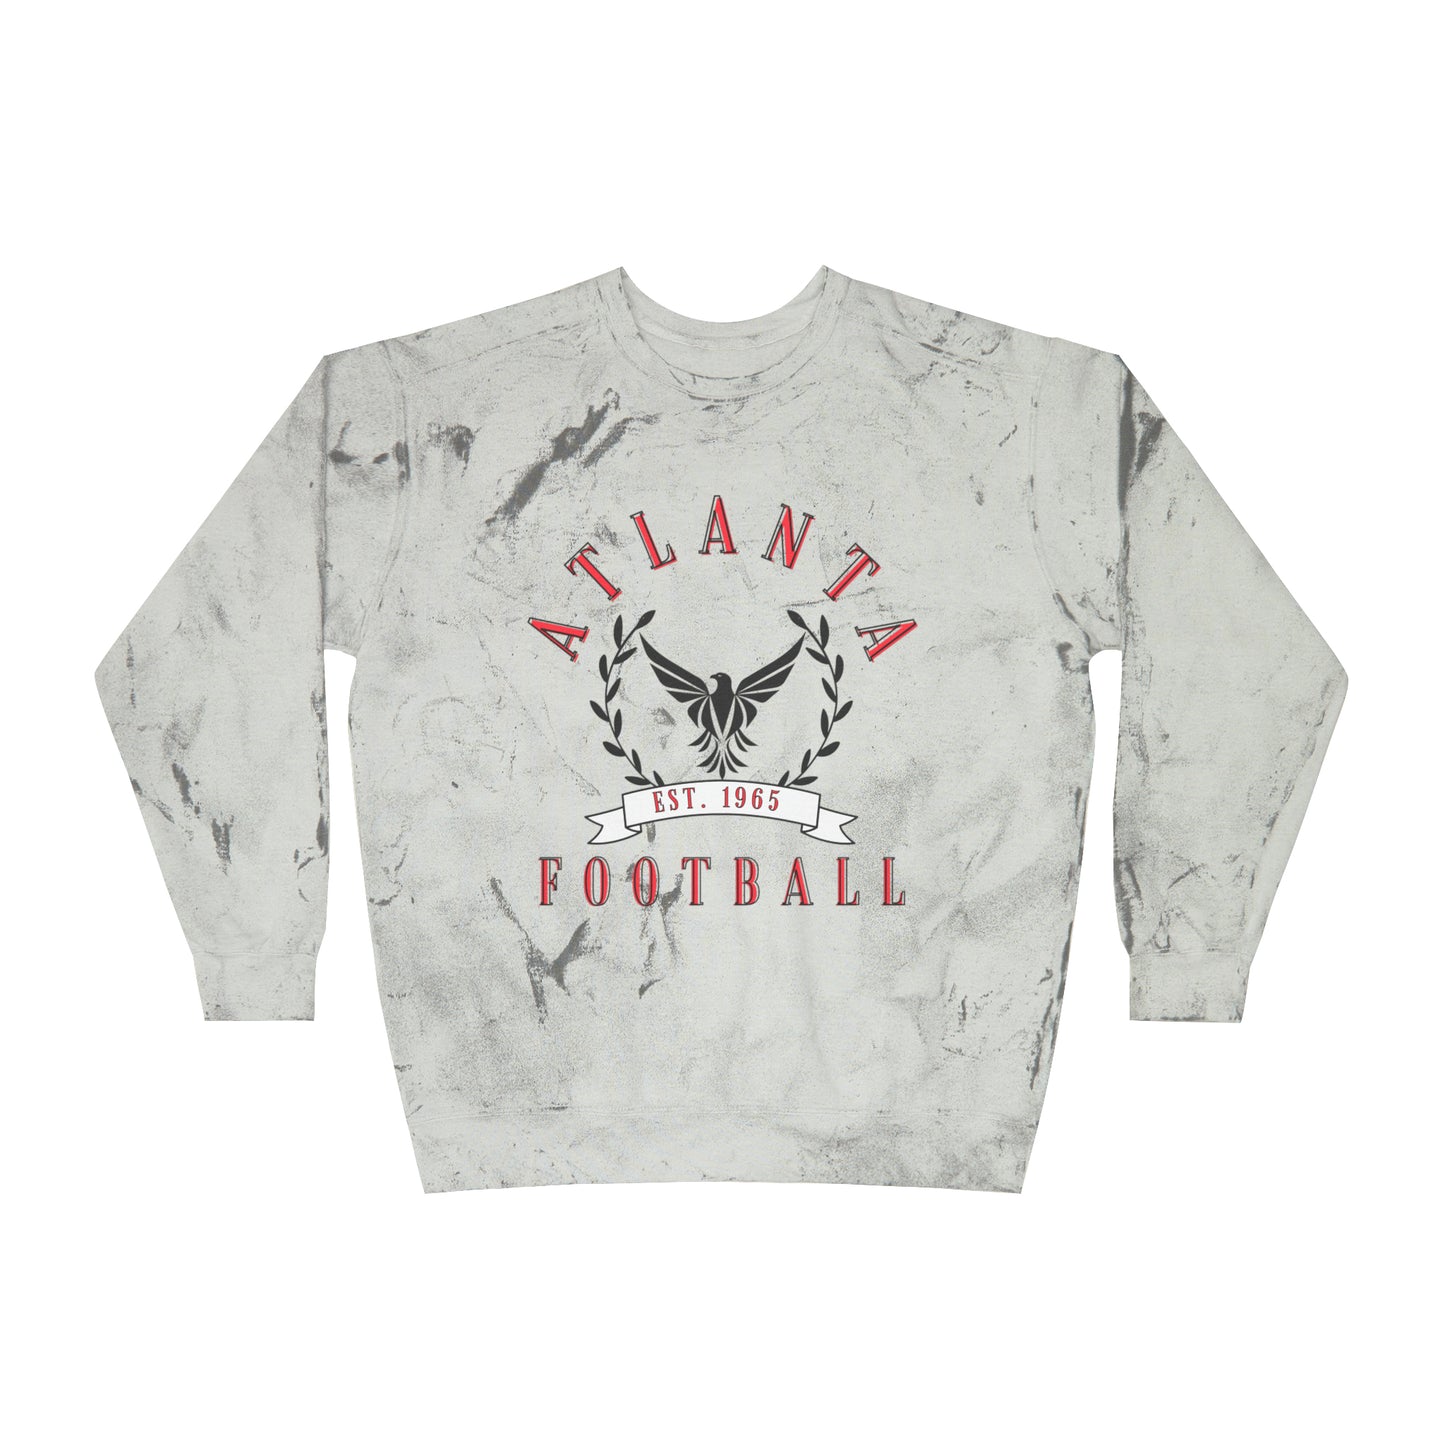 Tie Dye Comfort Colors Vintage Atlanta Falcons Crewneck - Retro Football Sweatshirt - Men's & Women's - Design 3